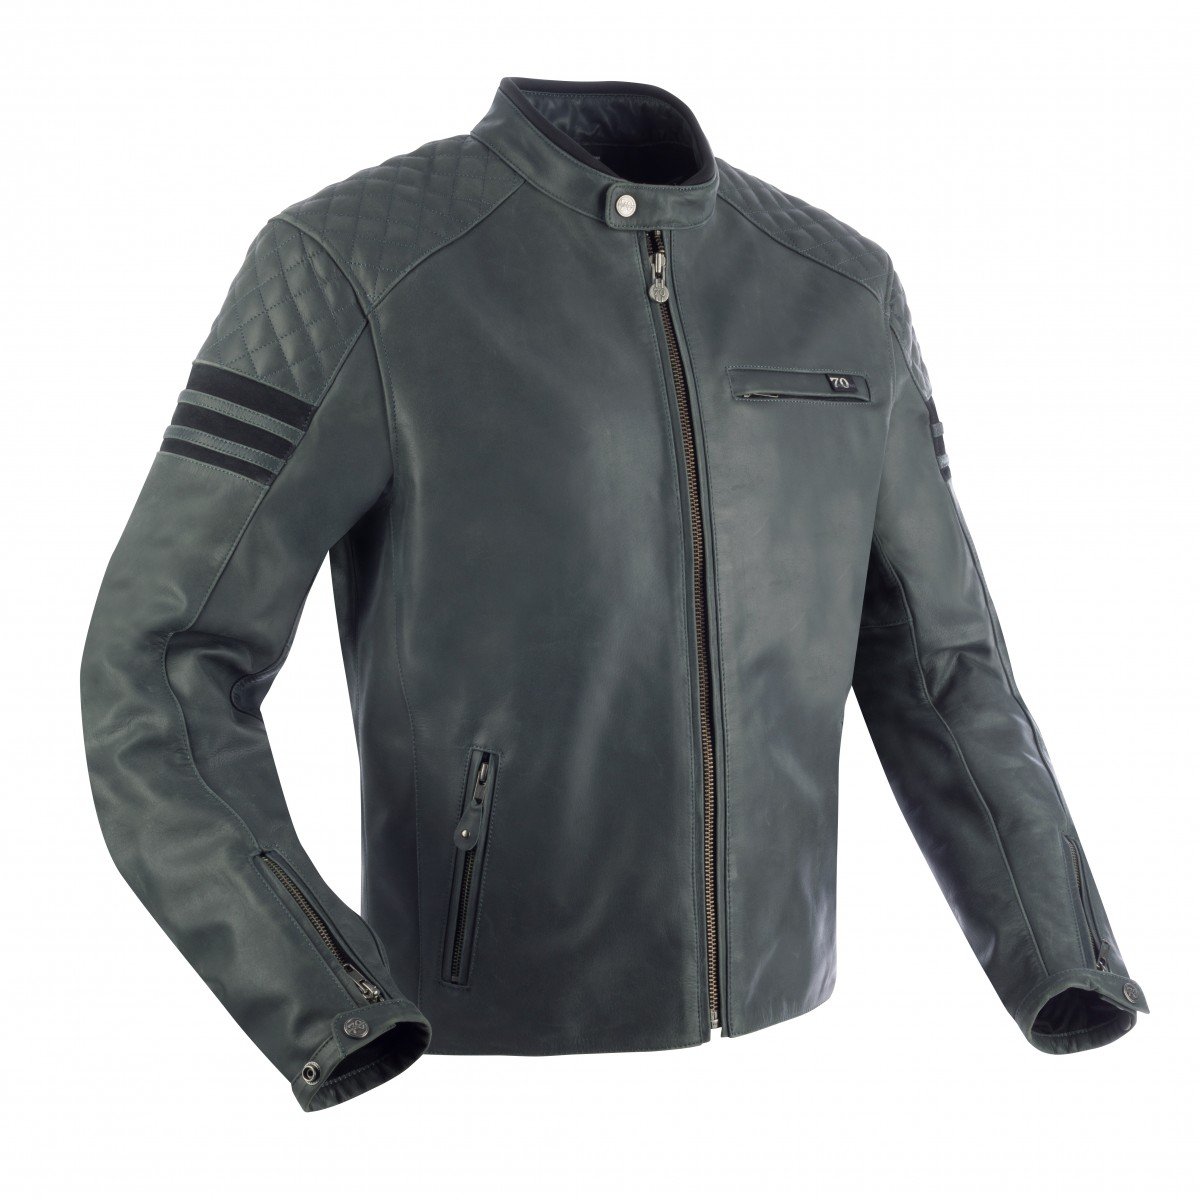 Image of Segura Track Jacket Gray Black Size S ID 3660815171905